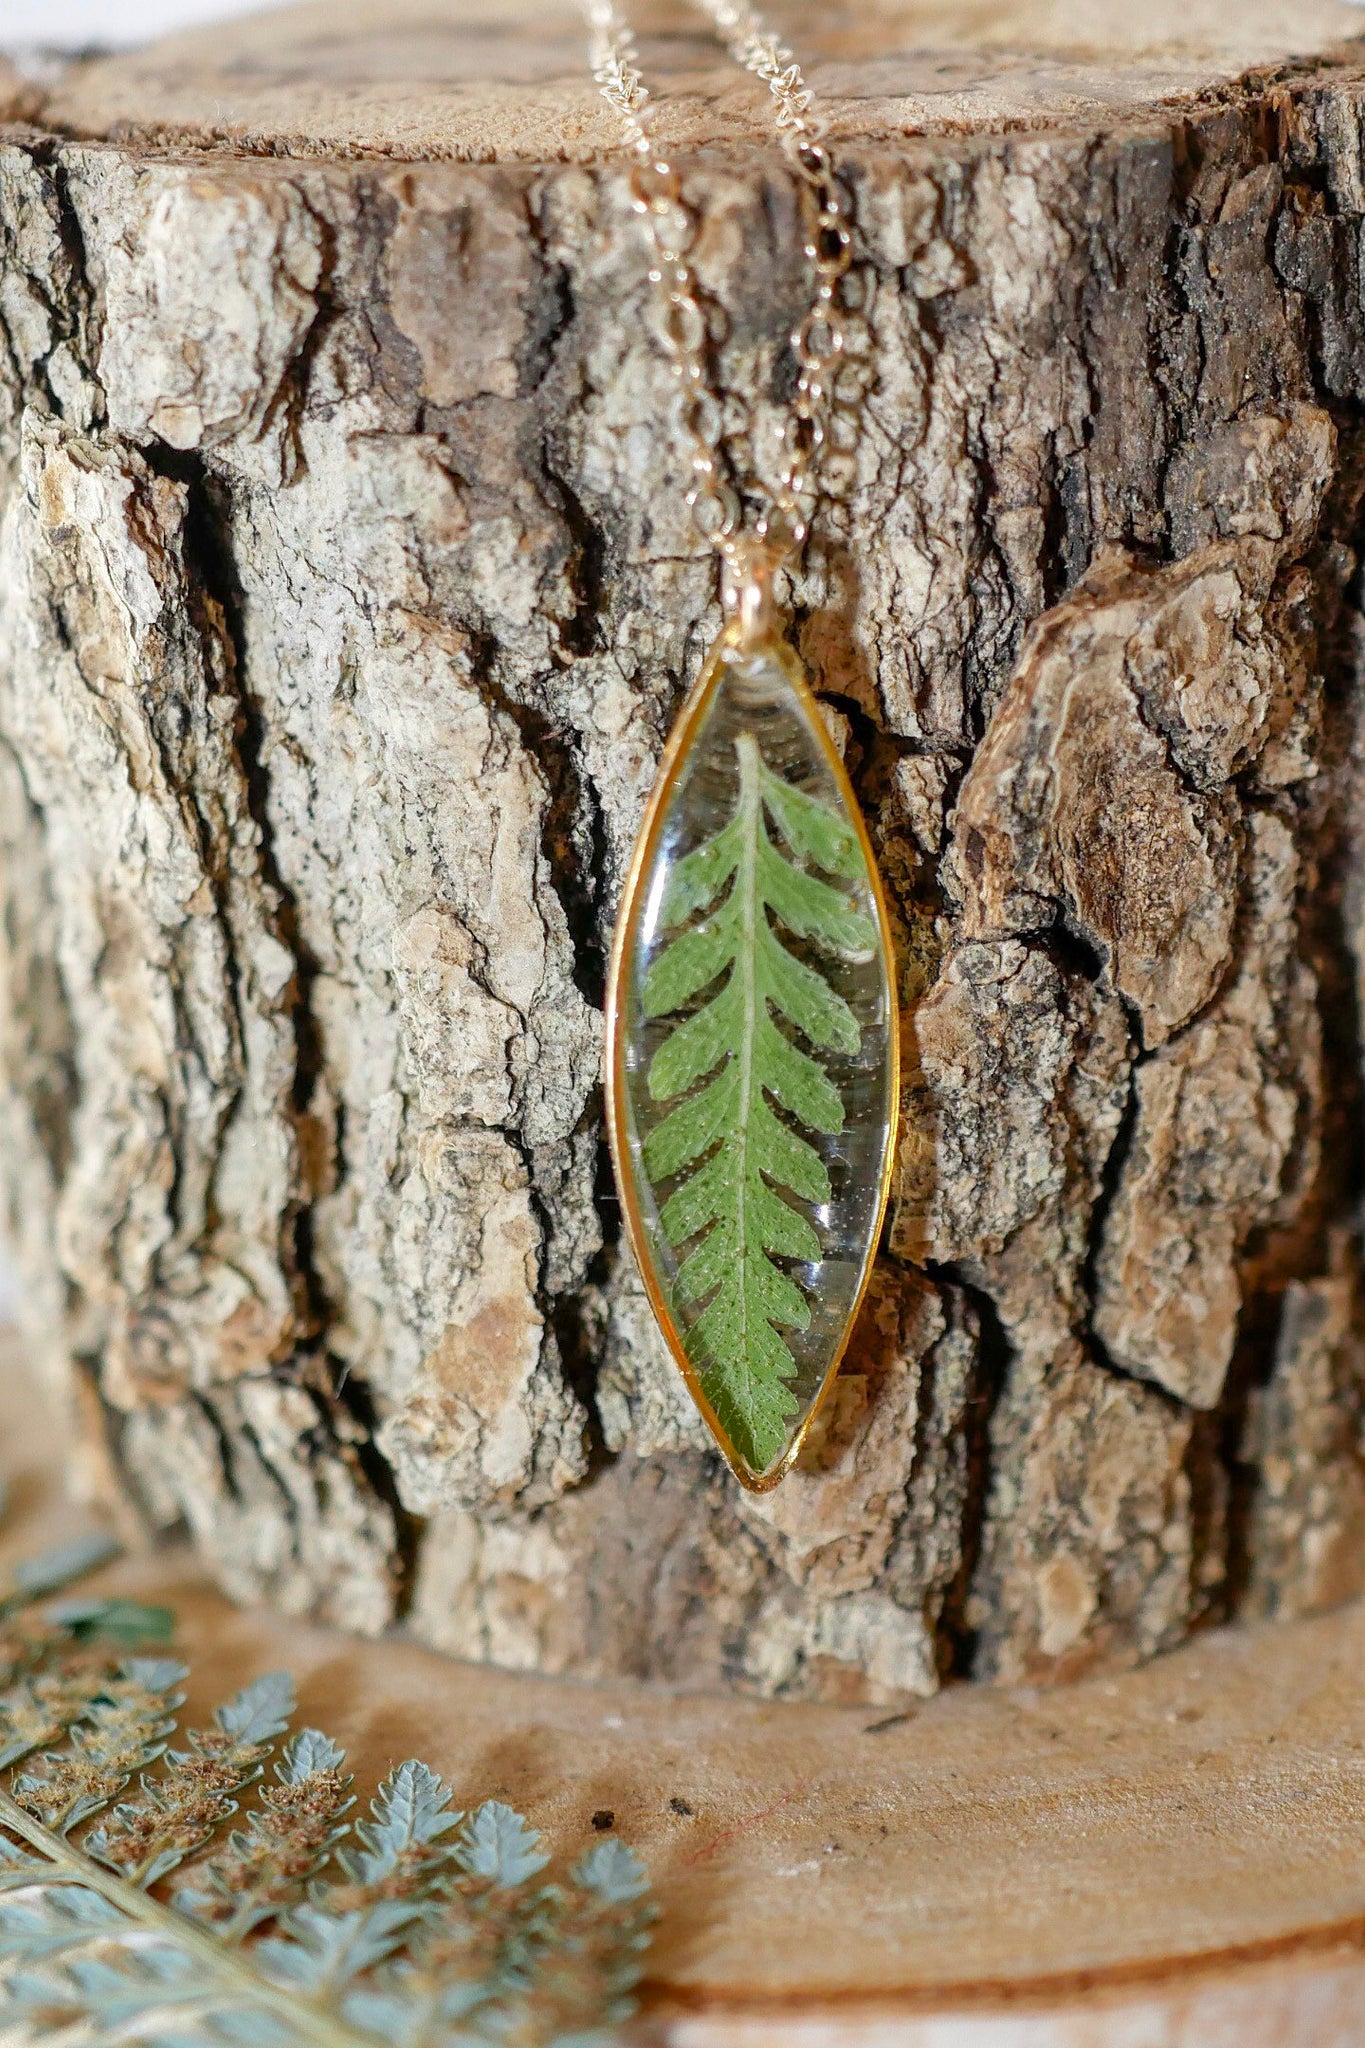 Dainty Fern Leaf Marquise Necklace